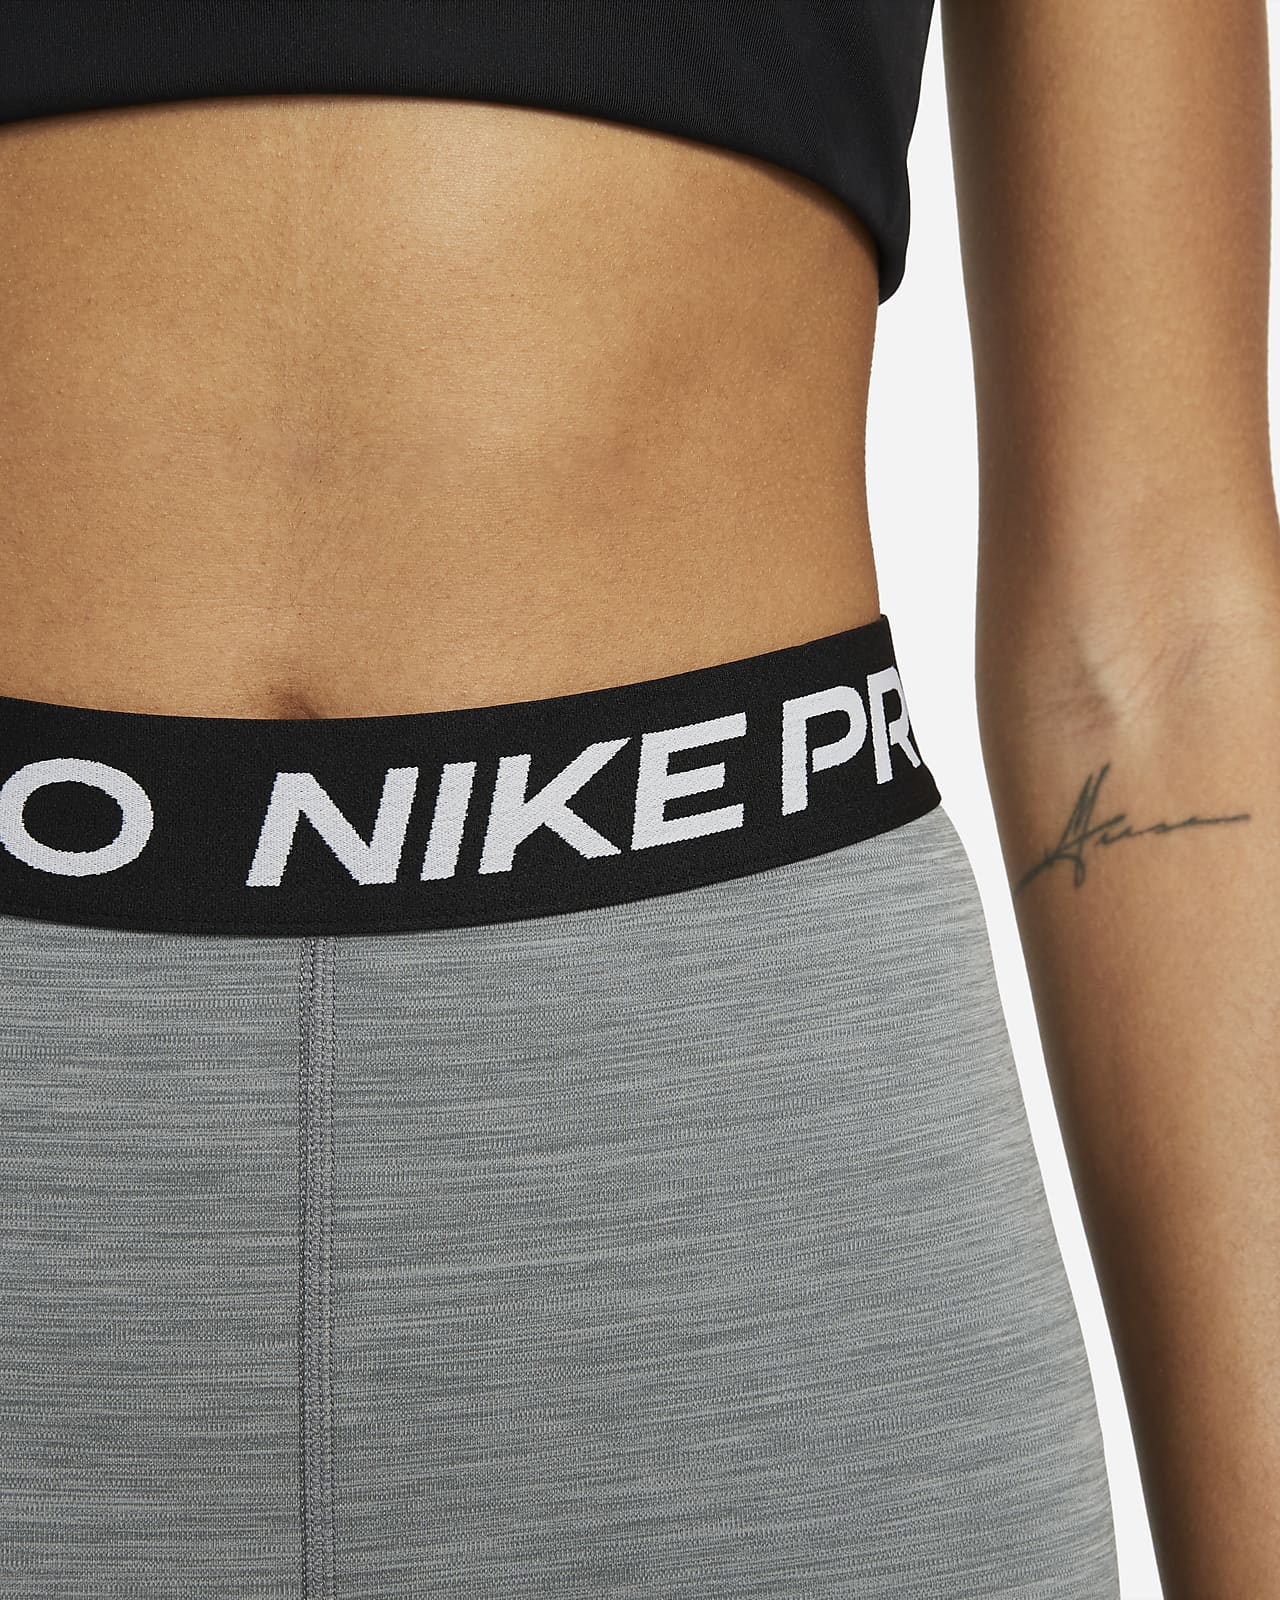 Nike Pro 365 Women's High-Waisted 7